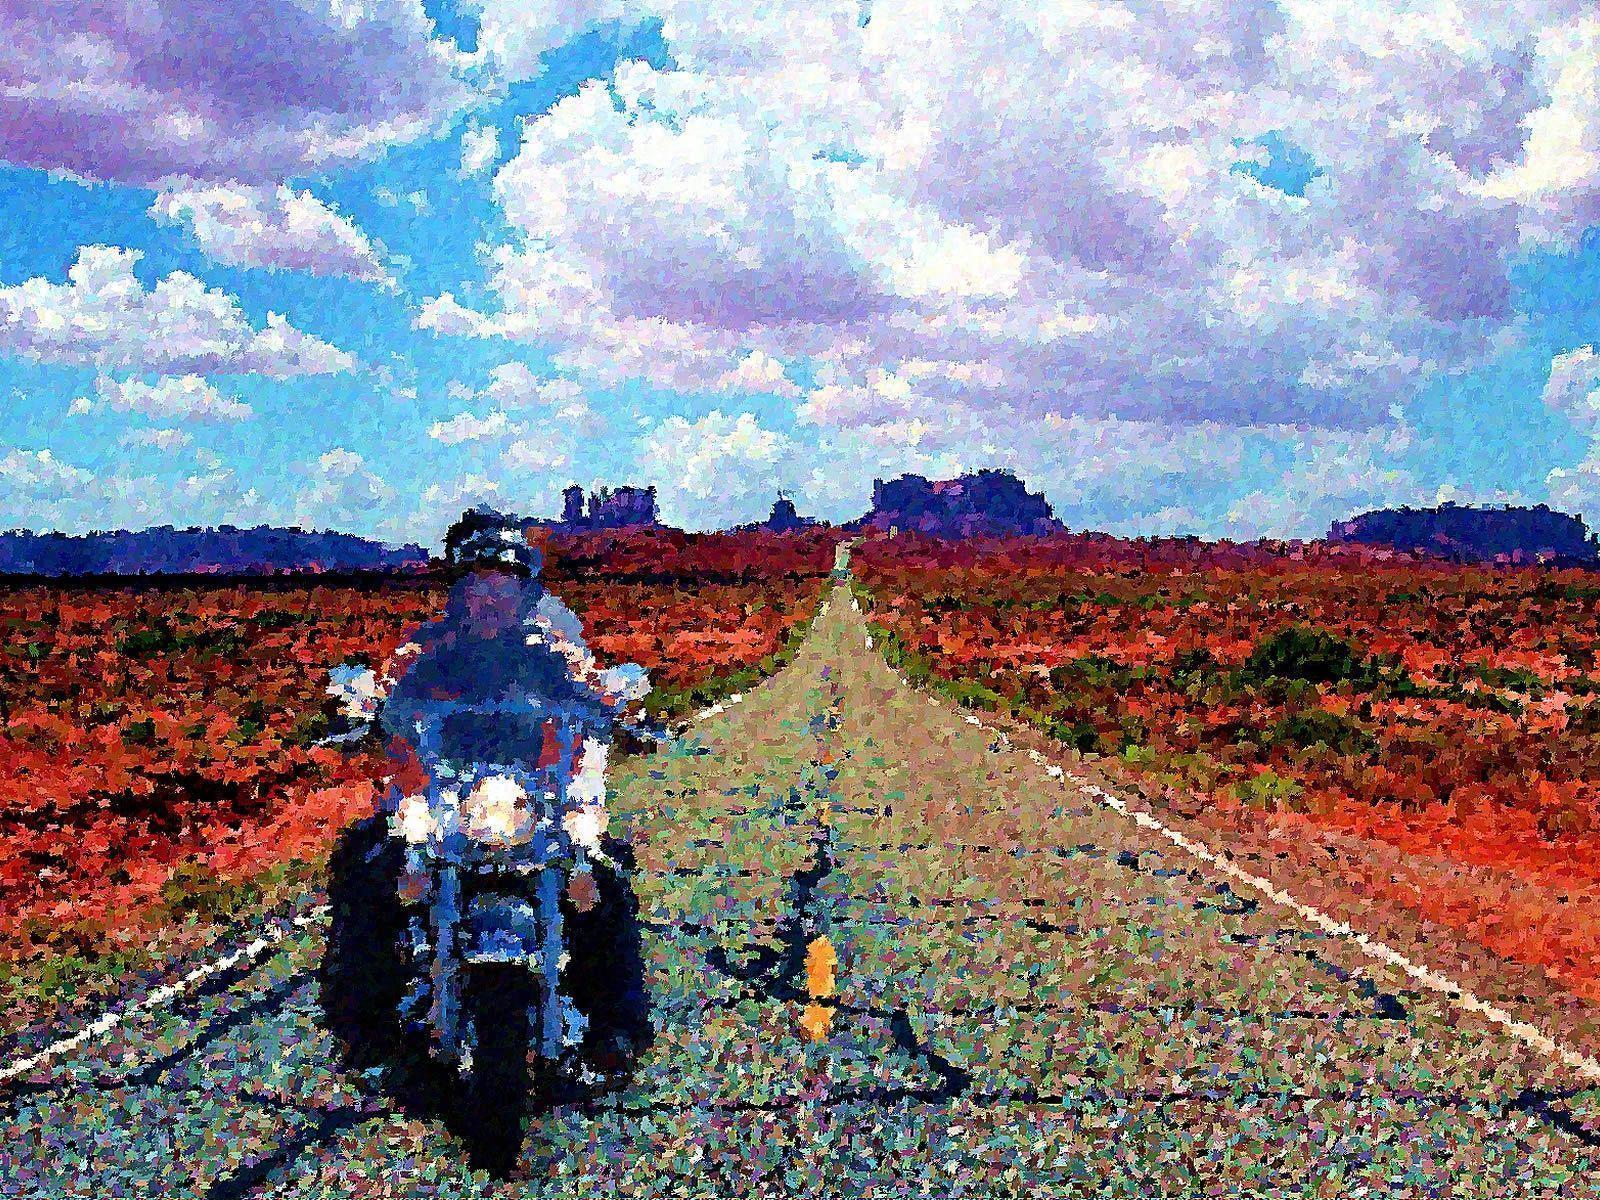 Free Desktop Wallpaper: Harley Davidson Motorcycles, Custom Bikes